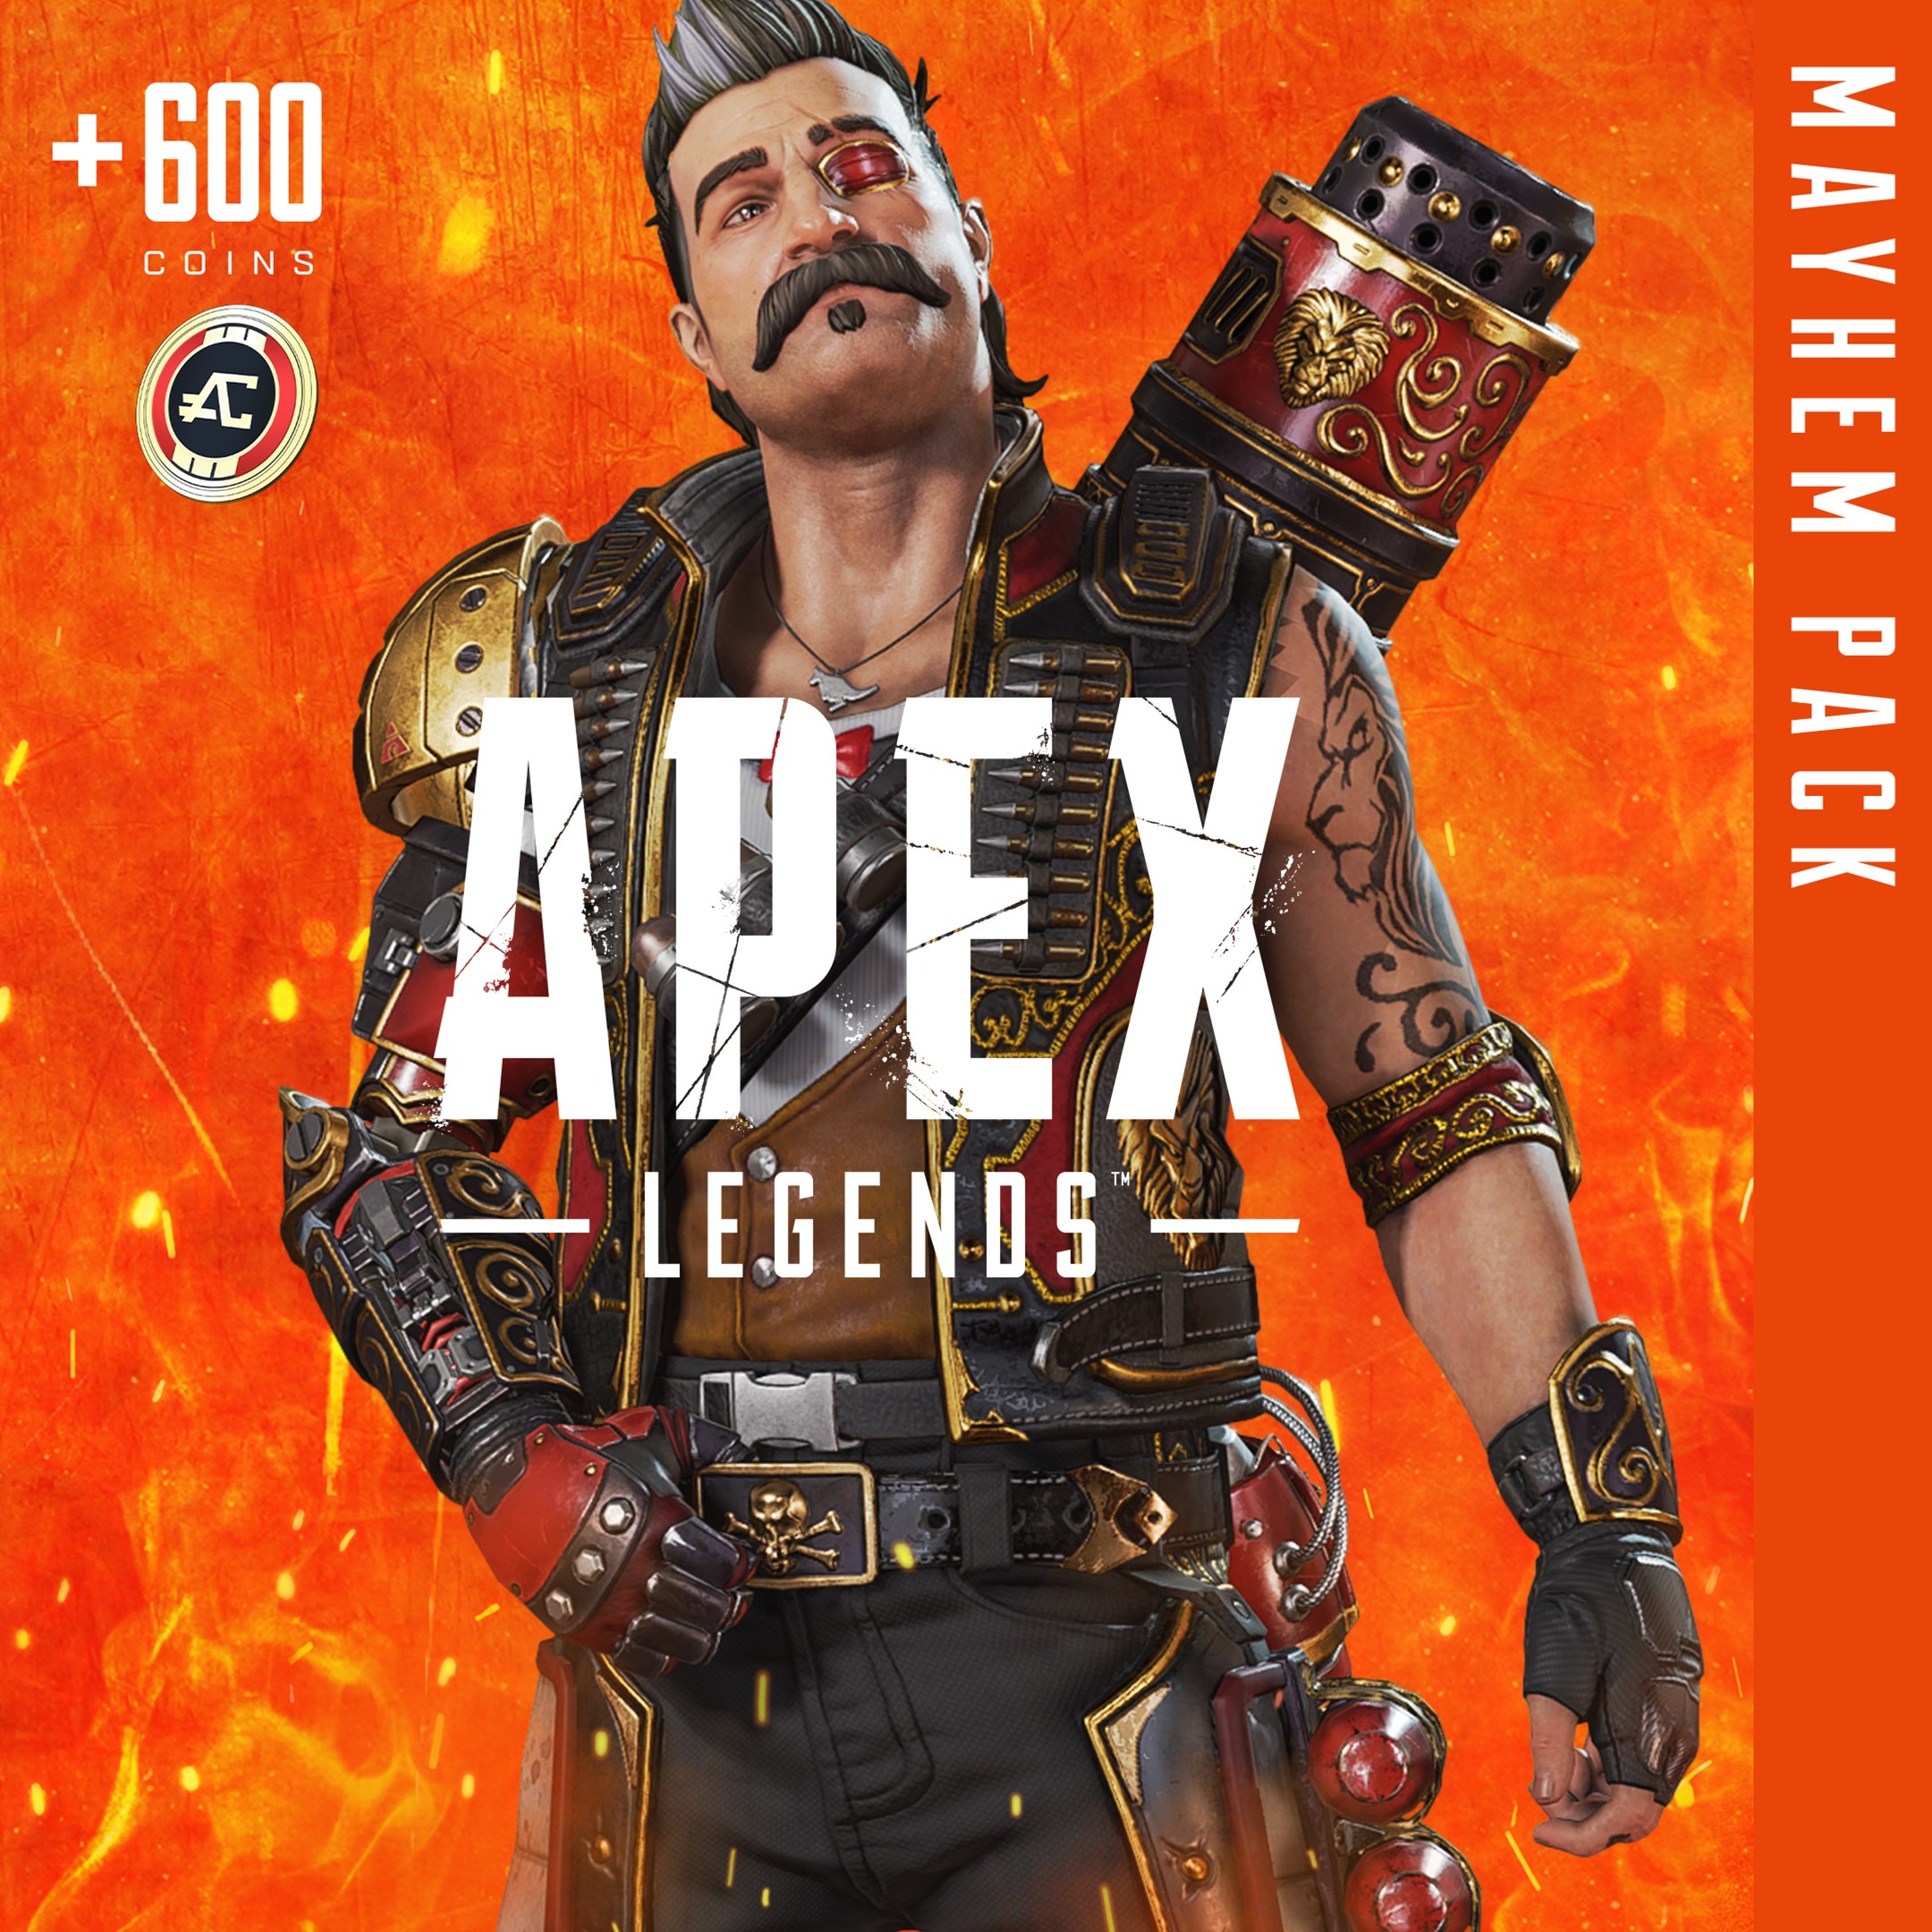 Apex Legends™ – Chaos-Pack